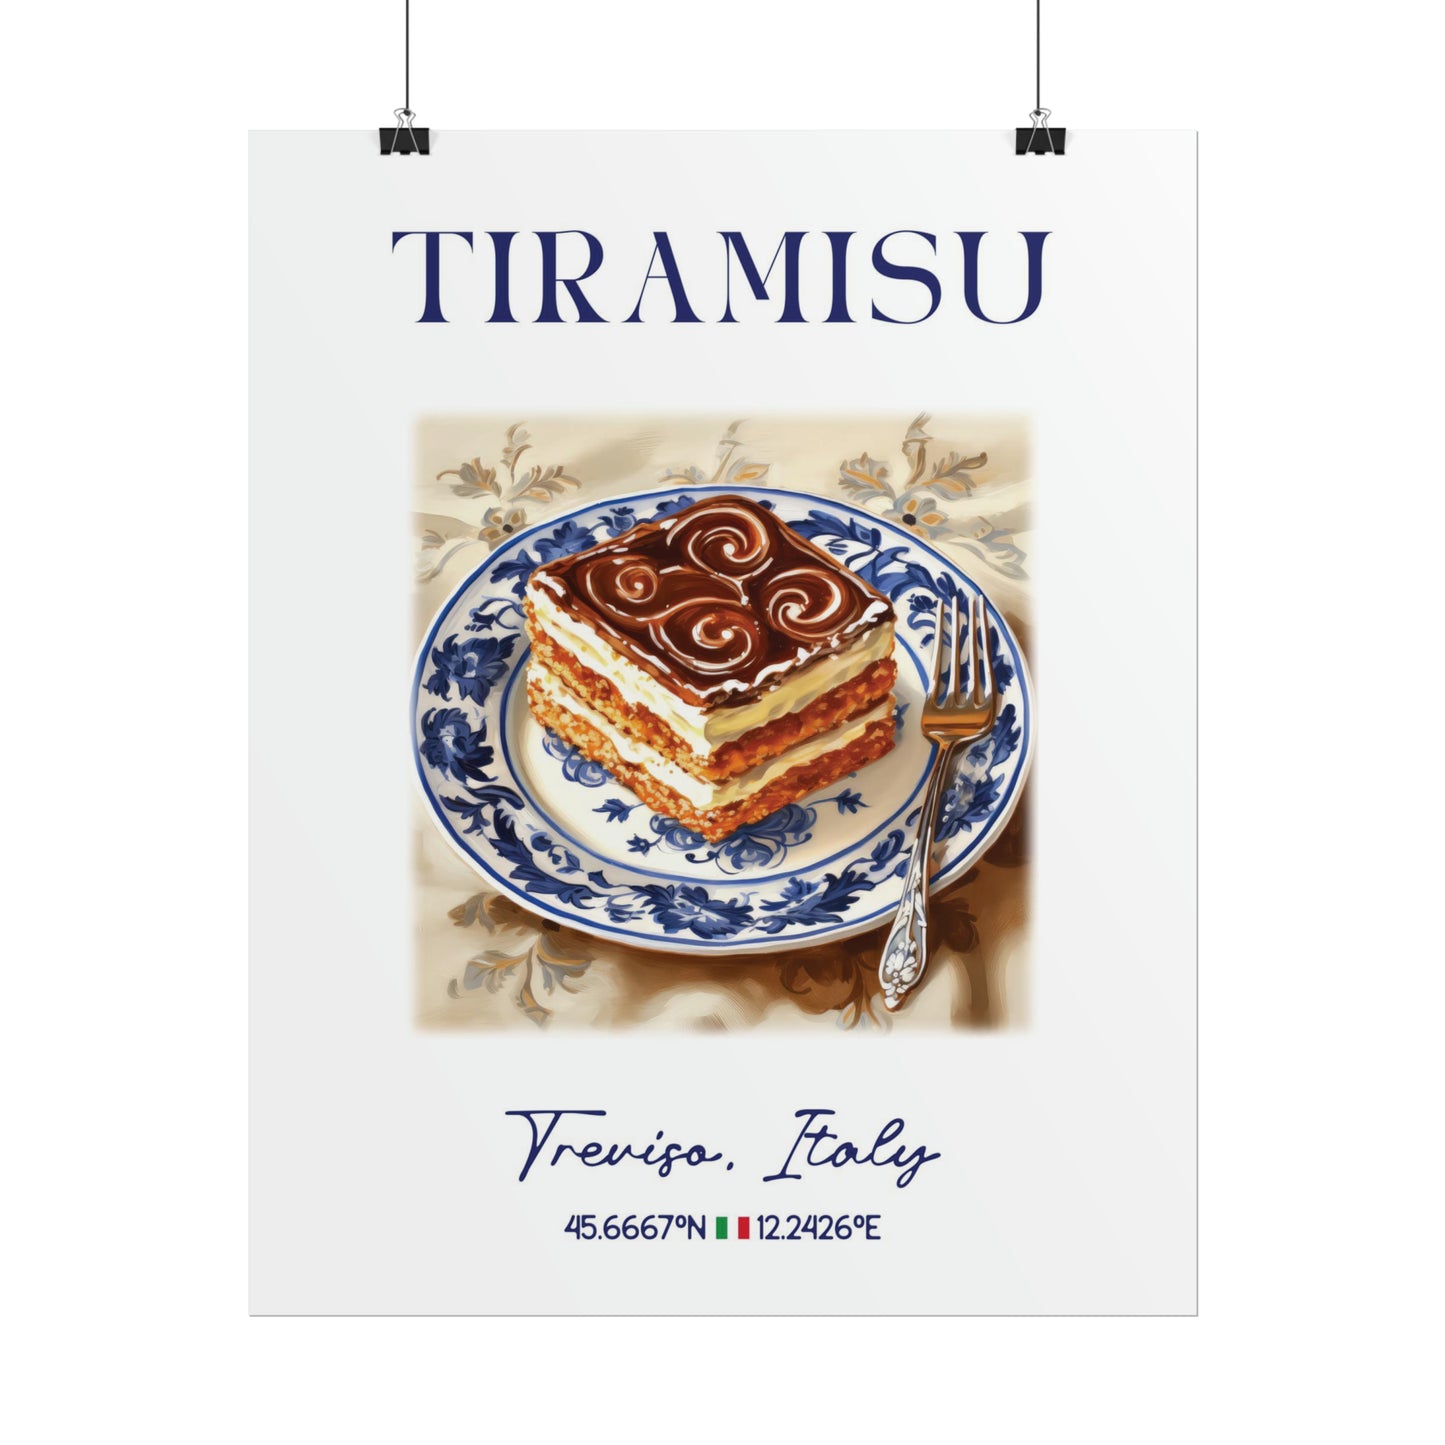 TIRAMISU Poster